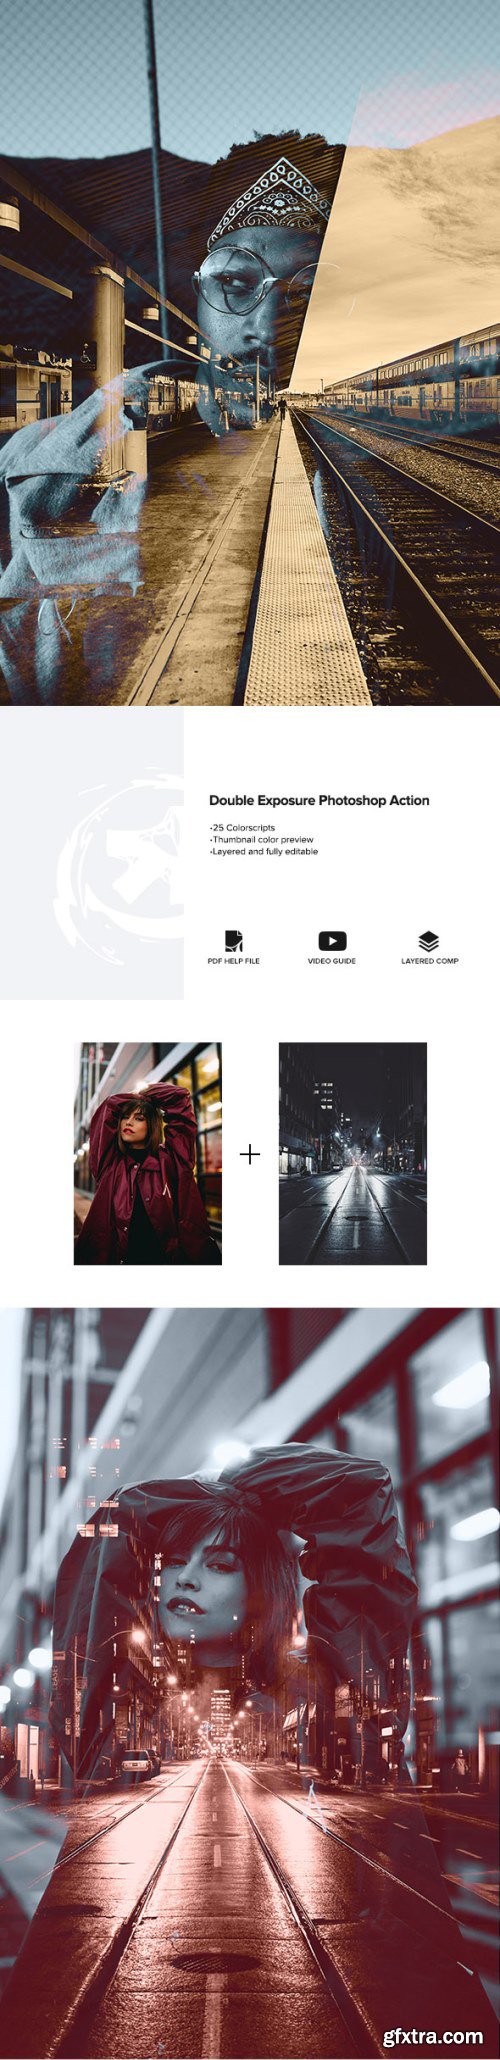 Graphicriver - Double Exposure Photoshop Action 21916025